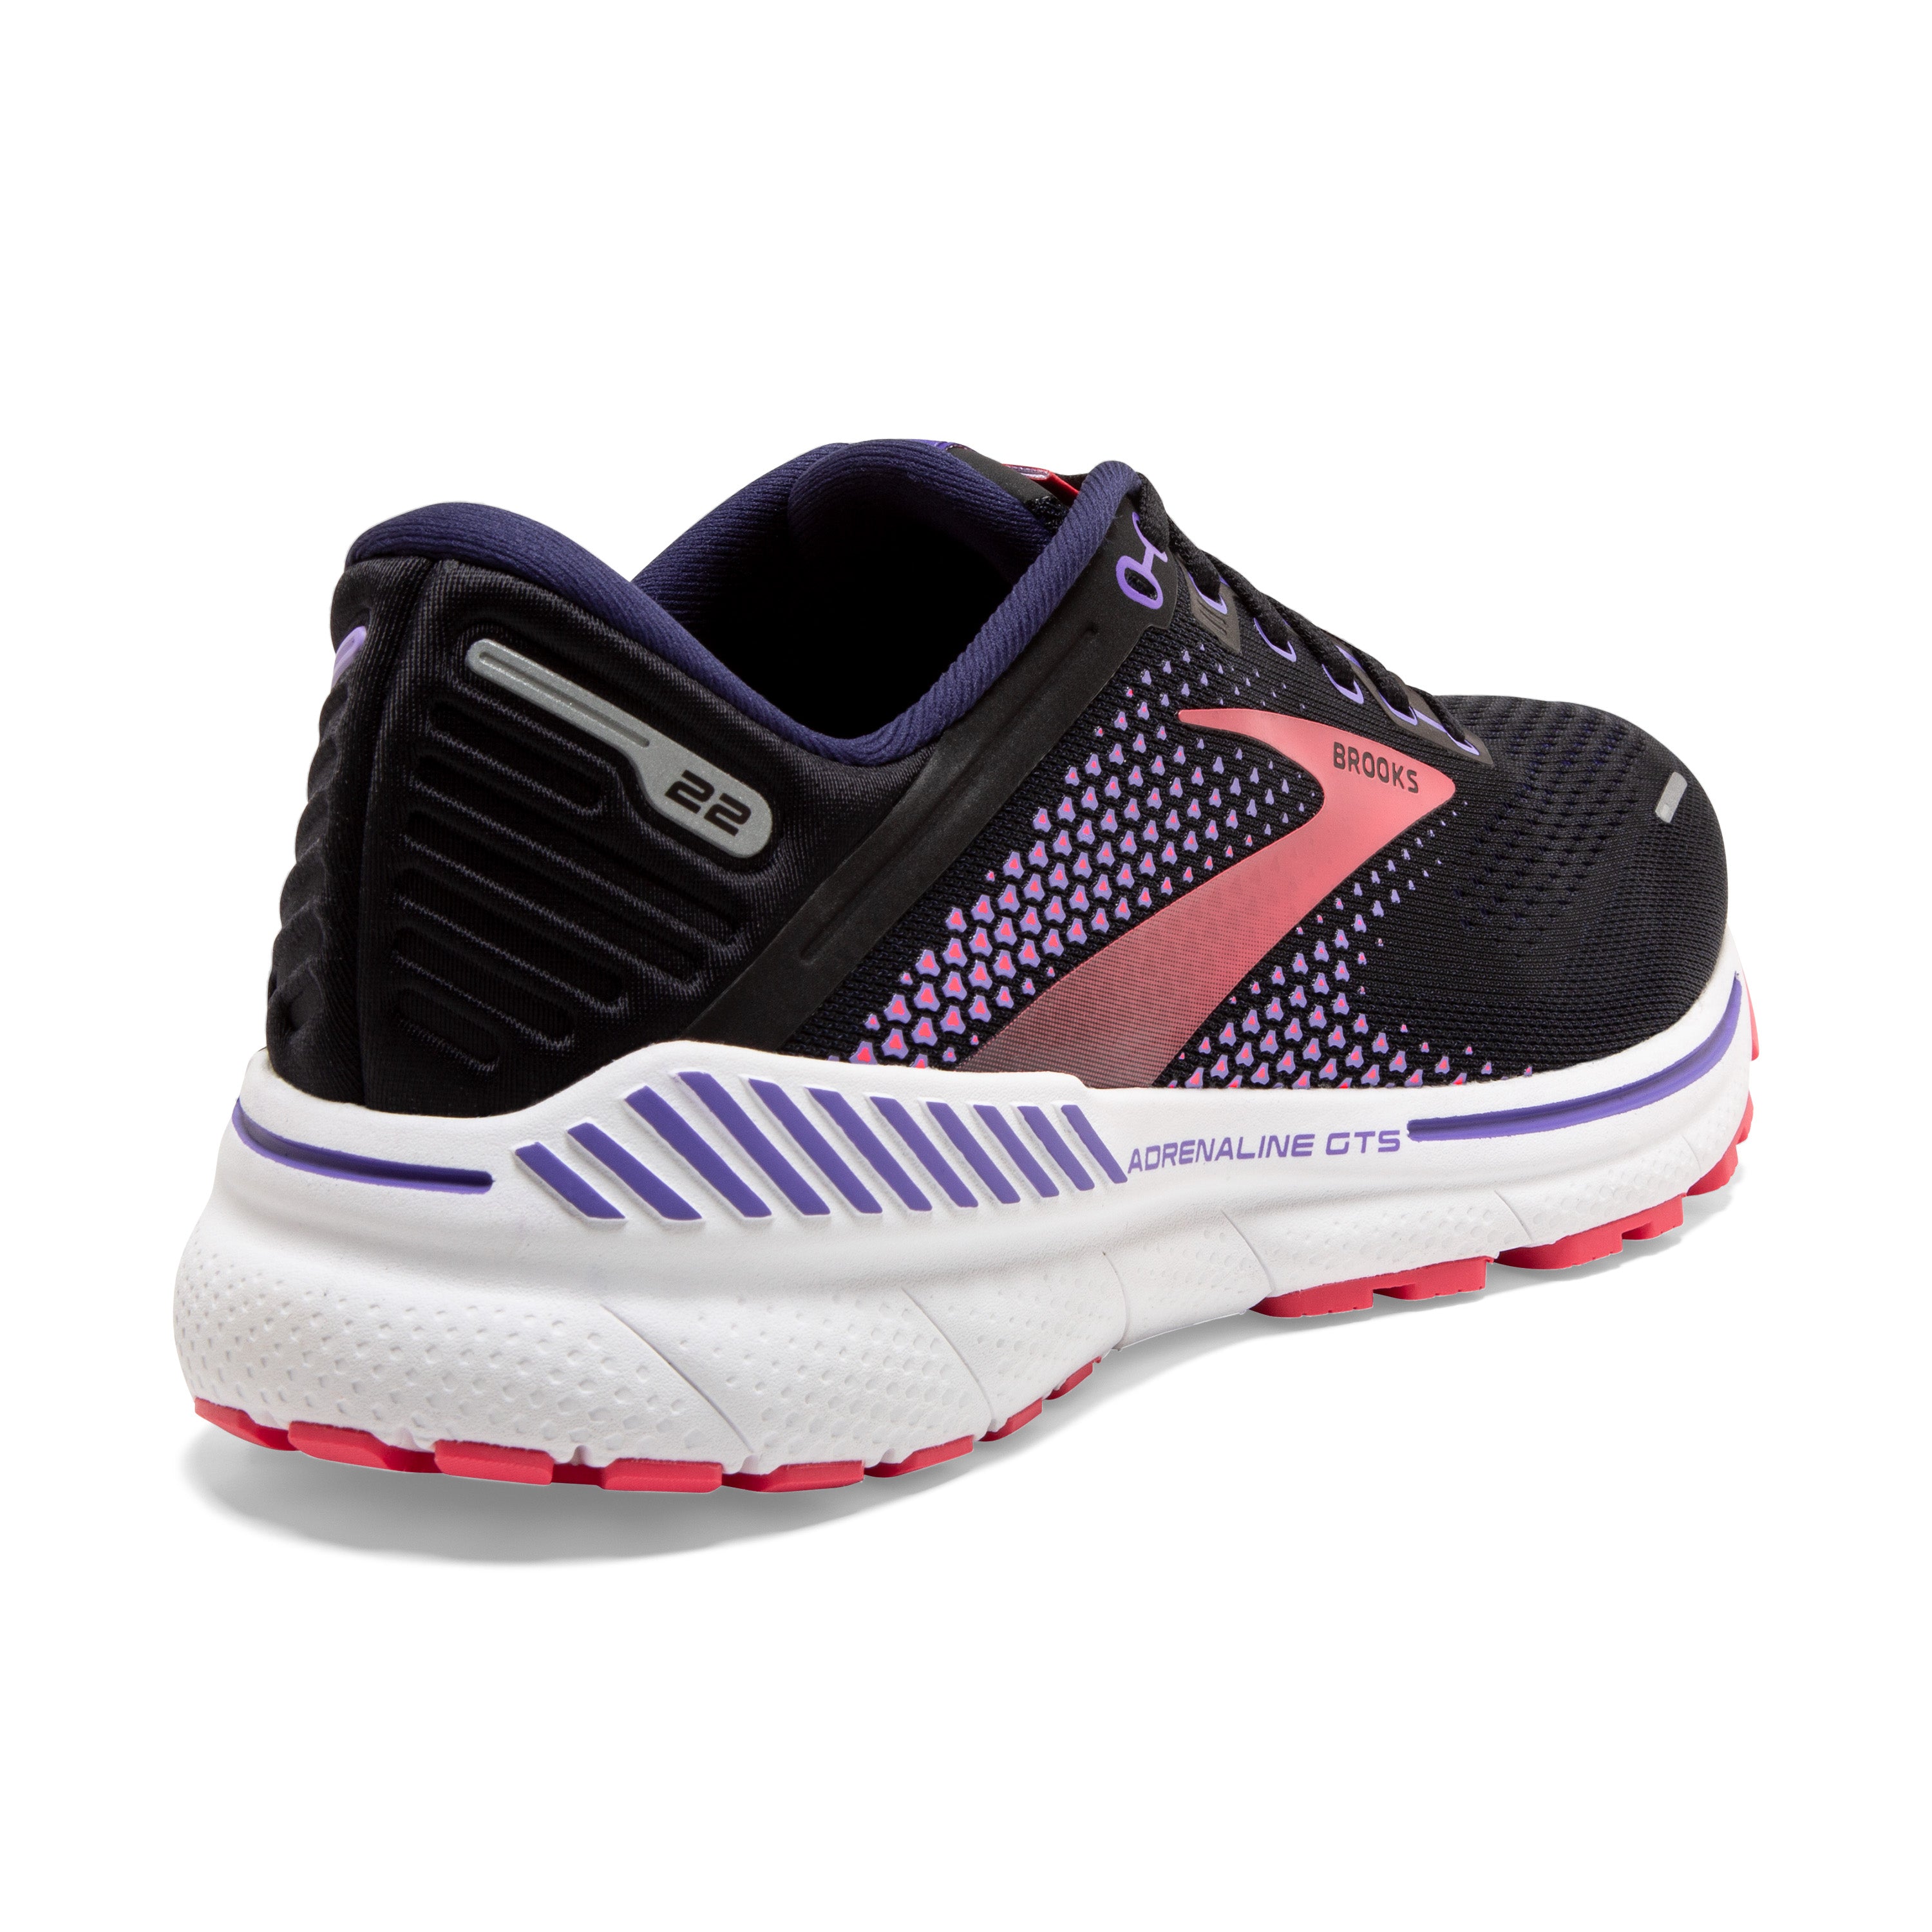 Adrenaline GTS 22 - Wide Women's Road Running Shoes